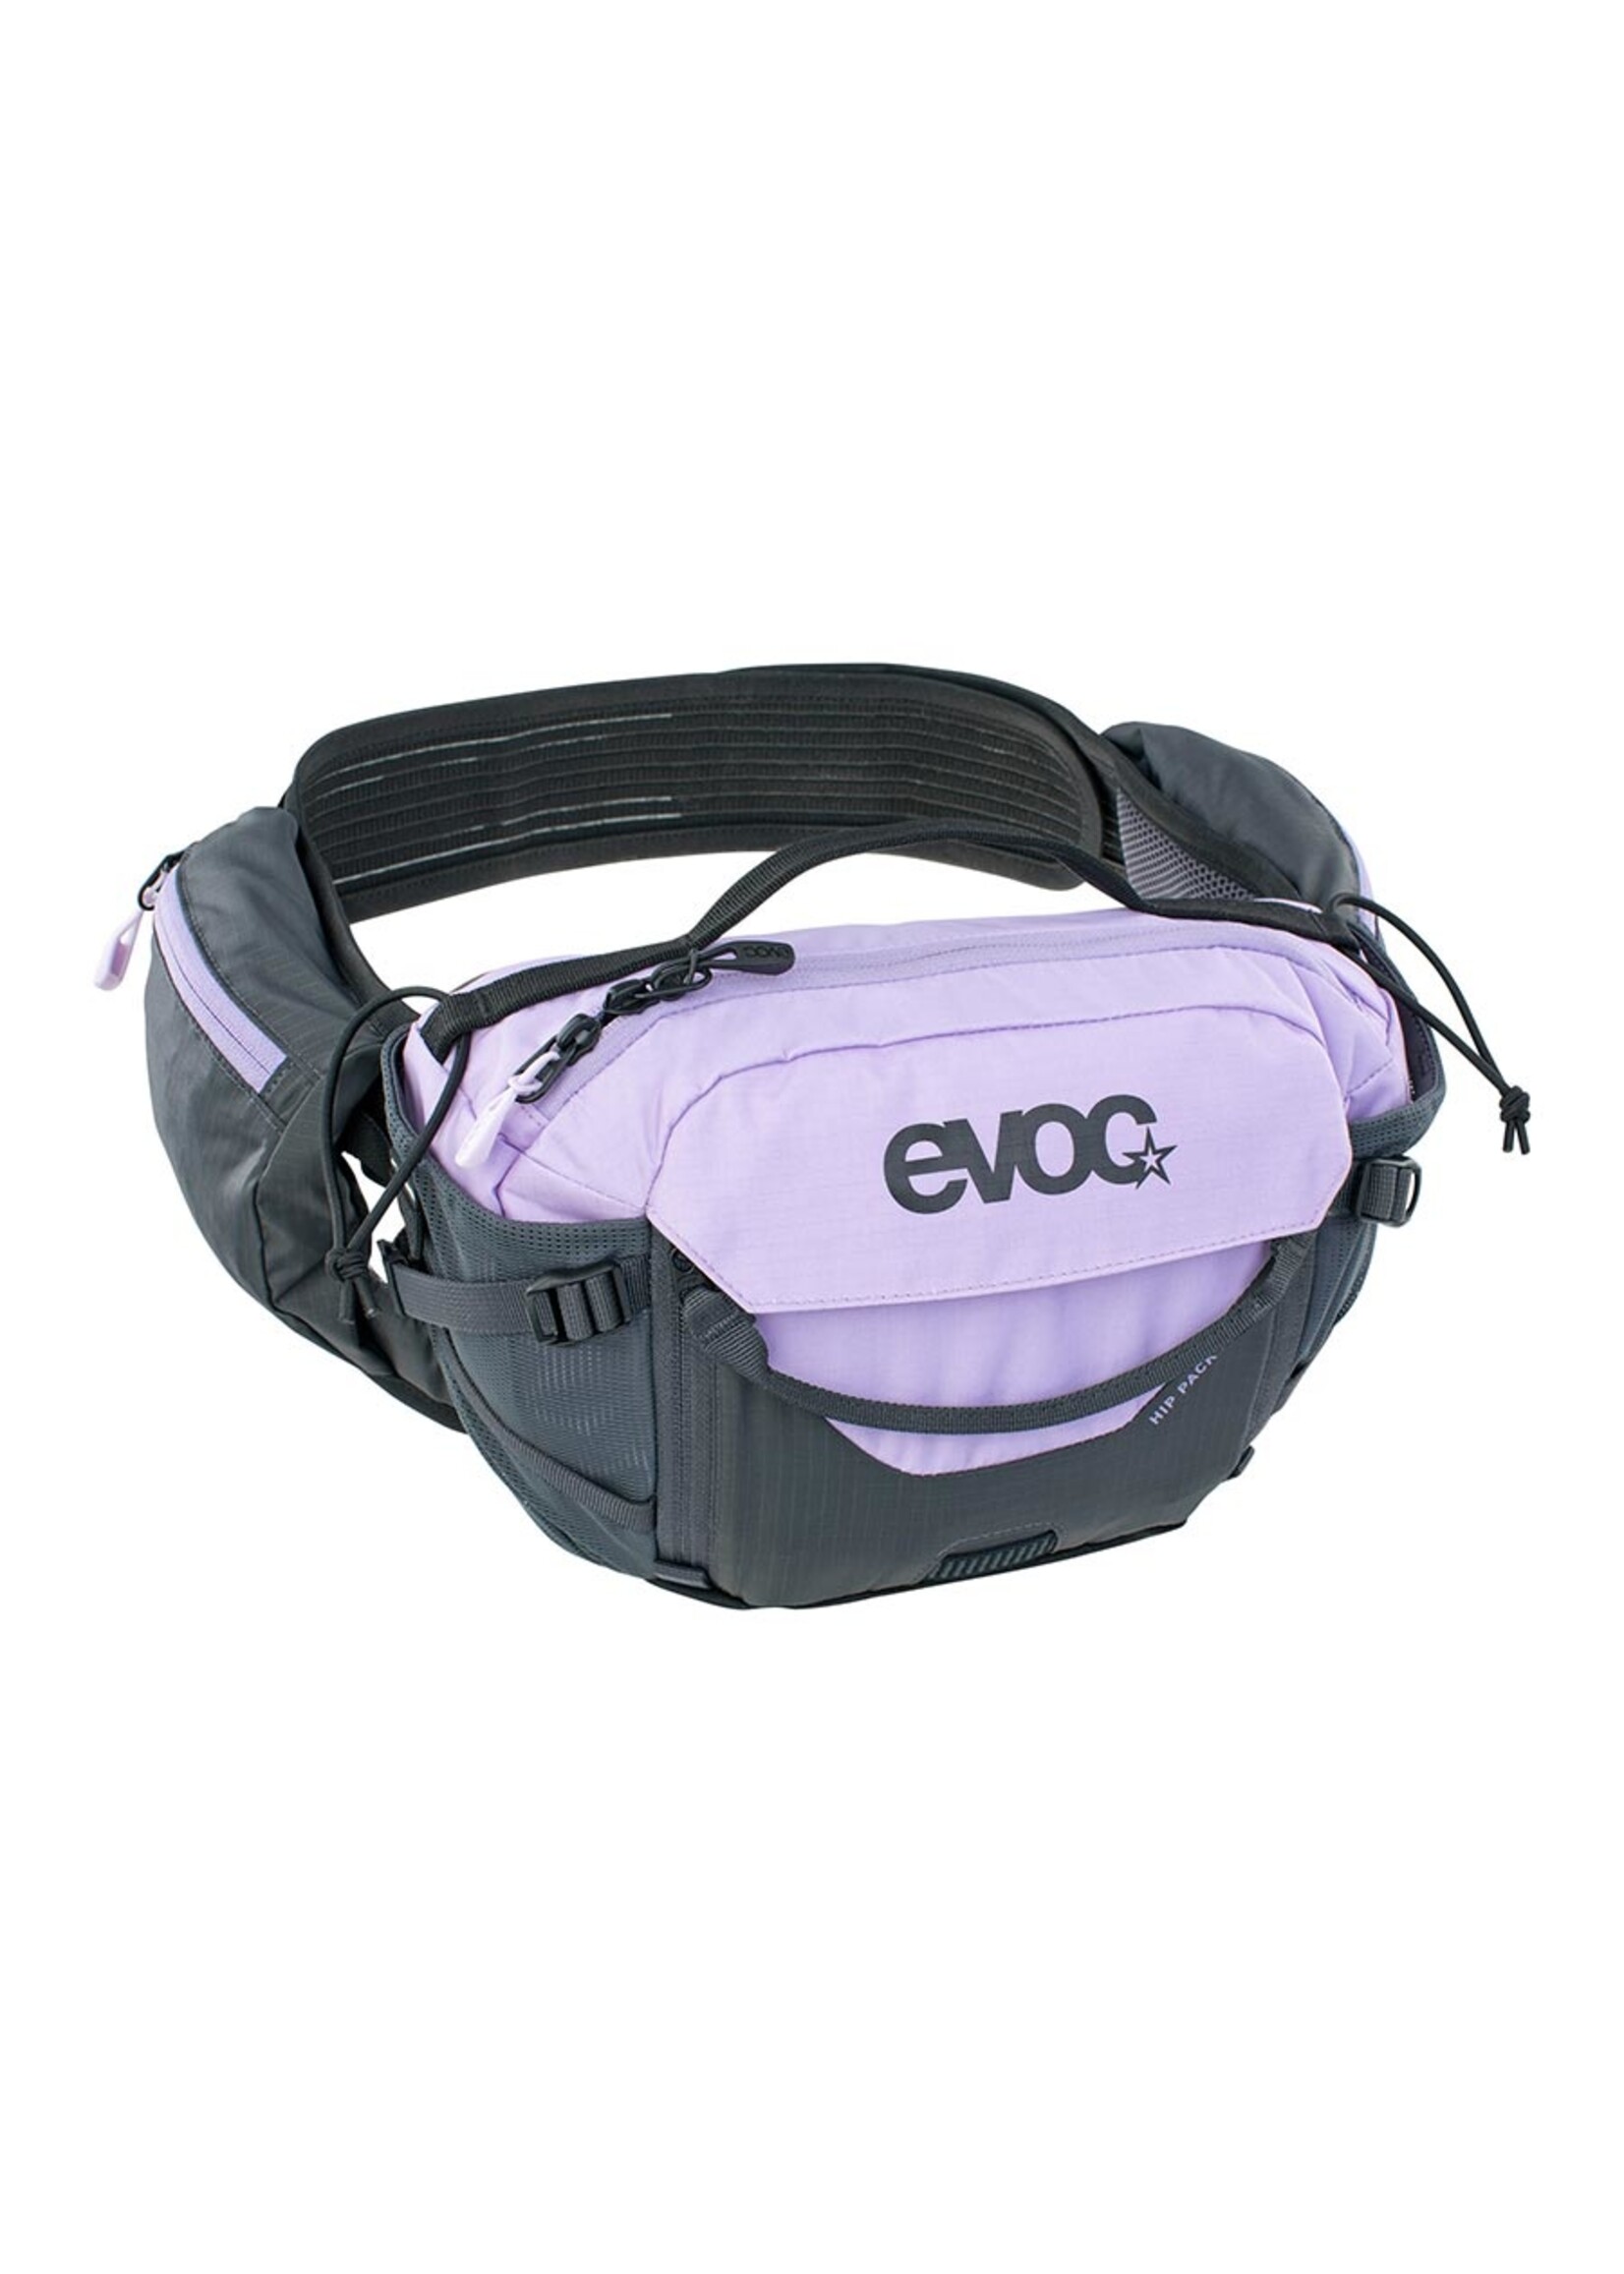 EVOC, Hip Pack Pro, Hydration Bag, Volume: 3L, Bladder: Included (1.5L), Multicolore